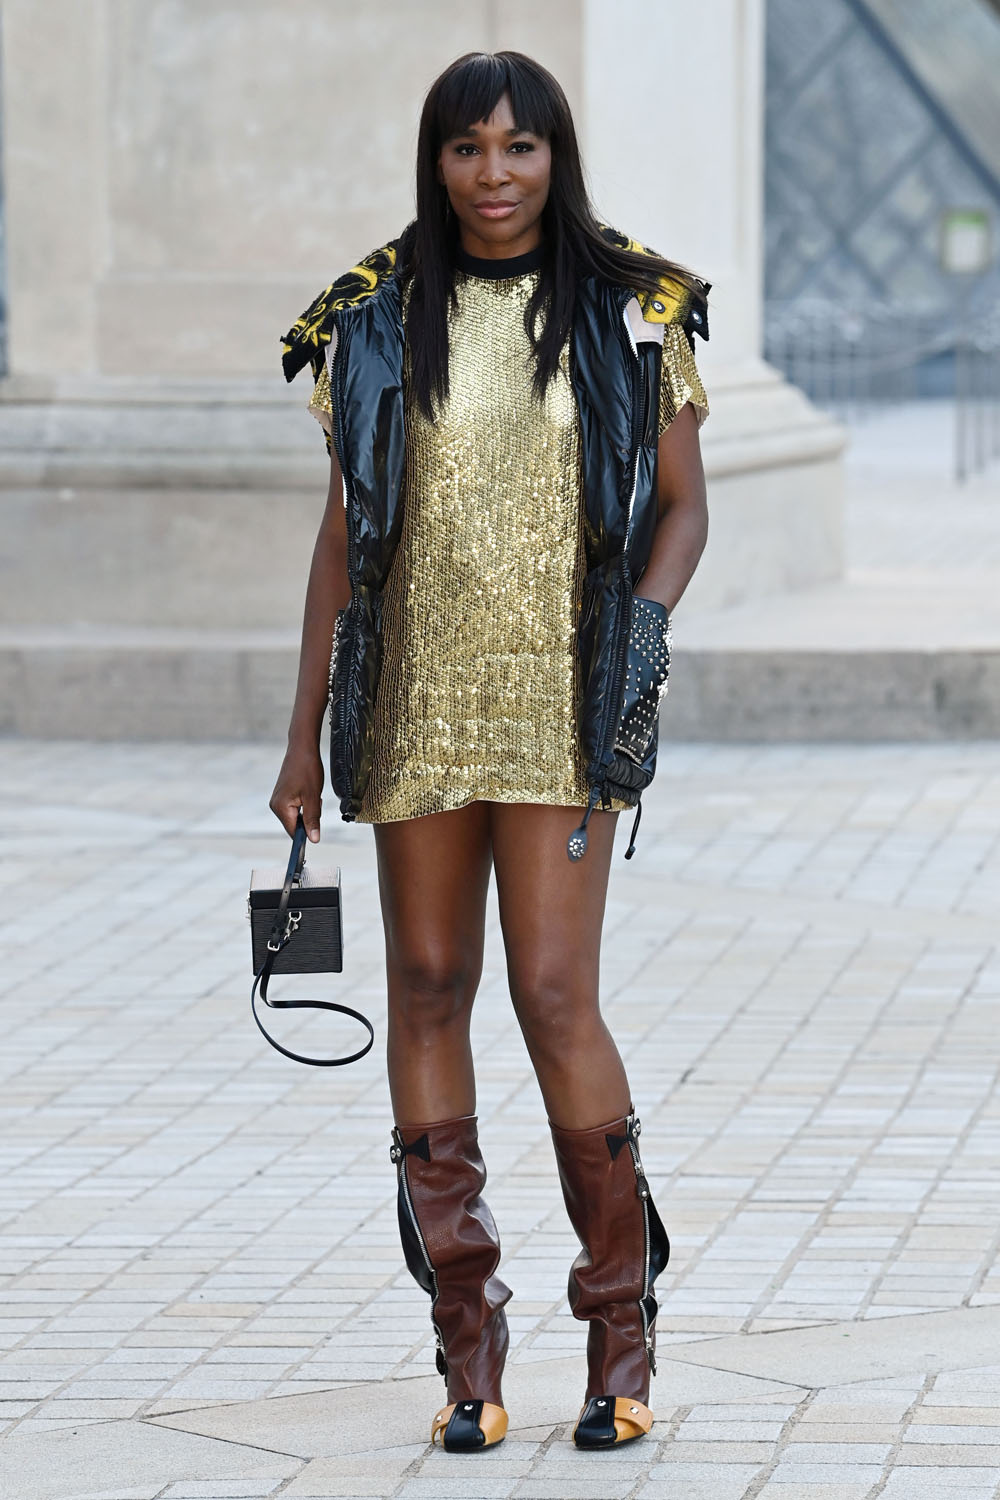 Venus Williams Wows in Fierce Blue Dress & Boots at Louis Vuitton